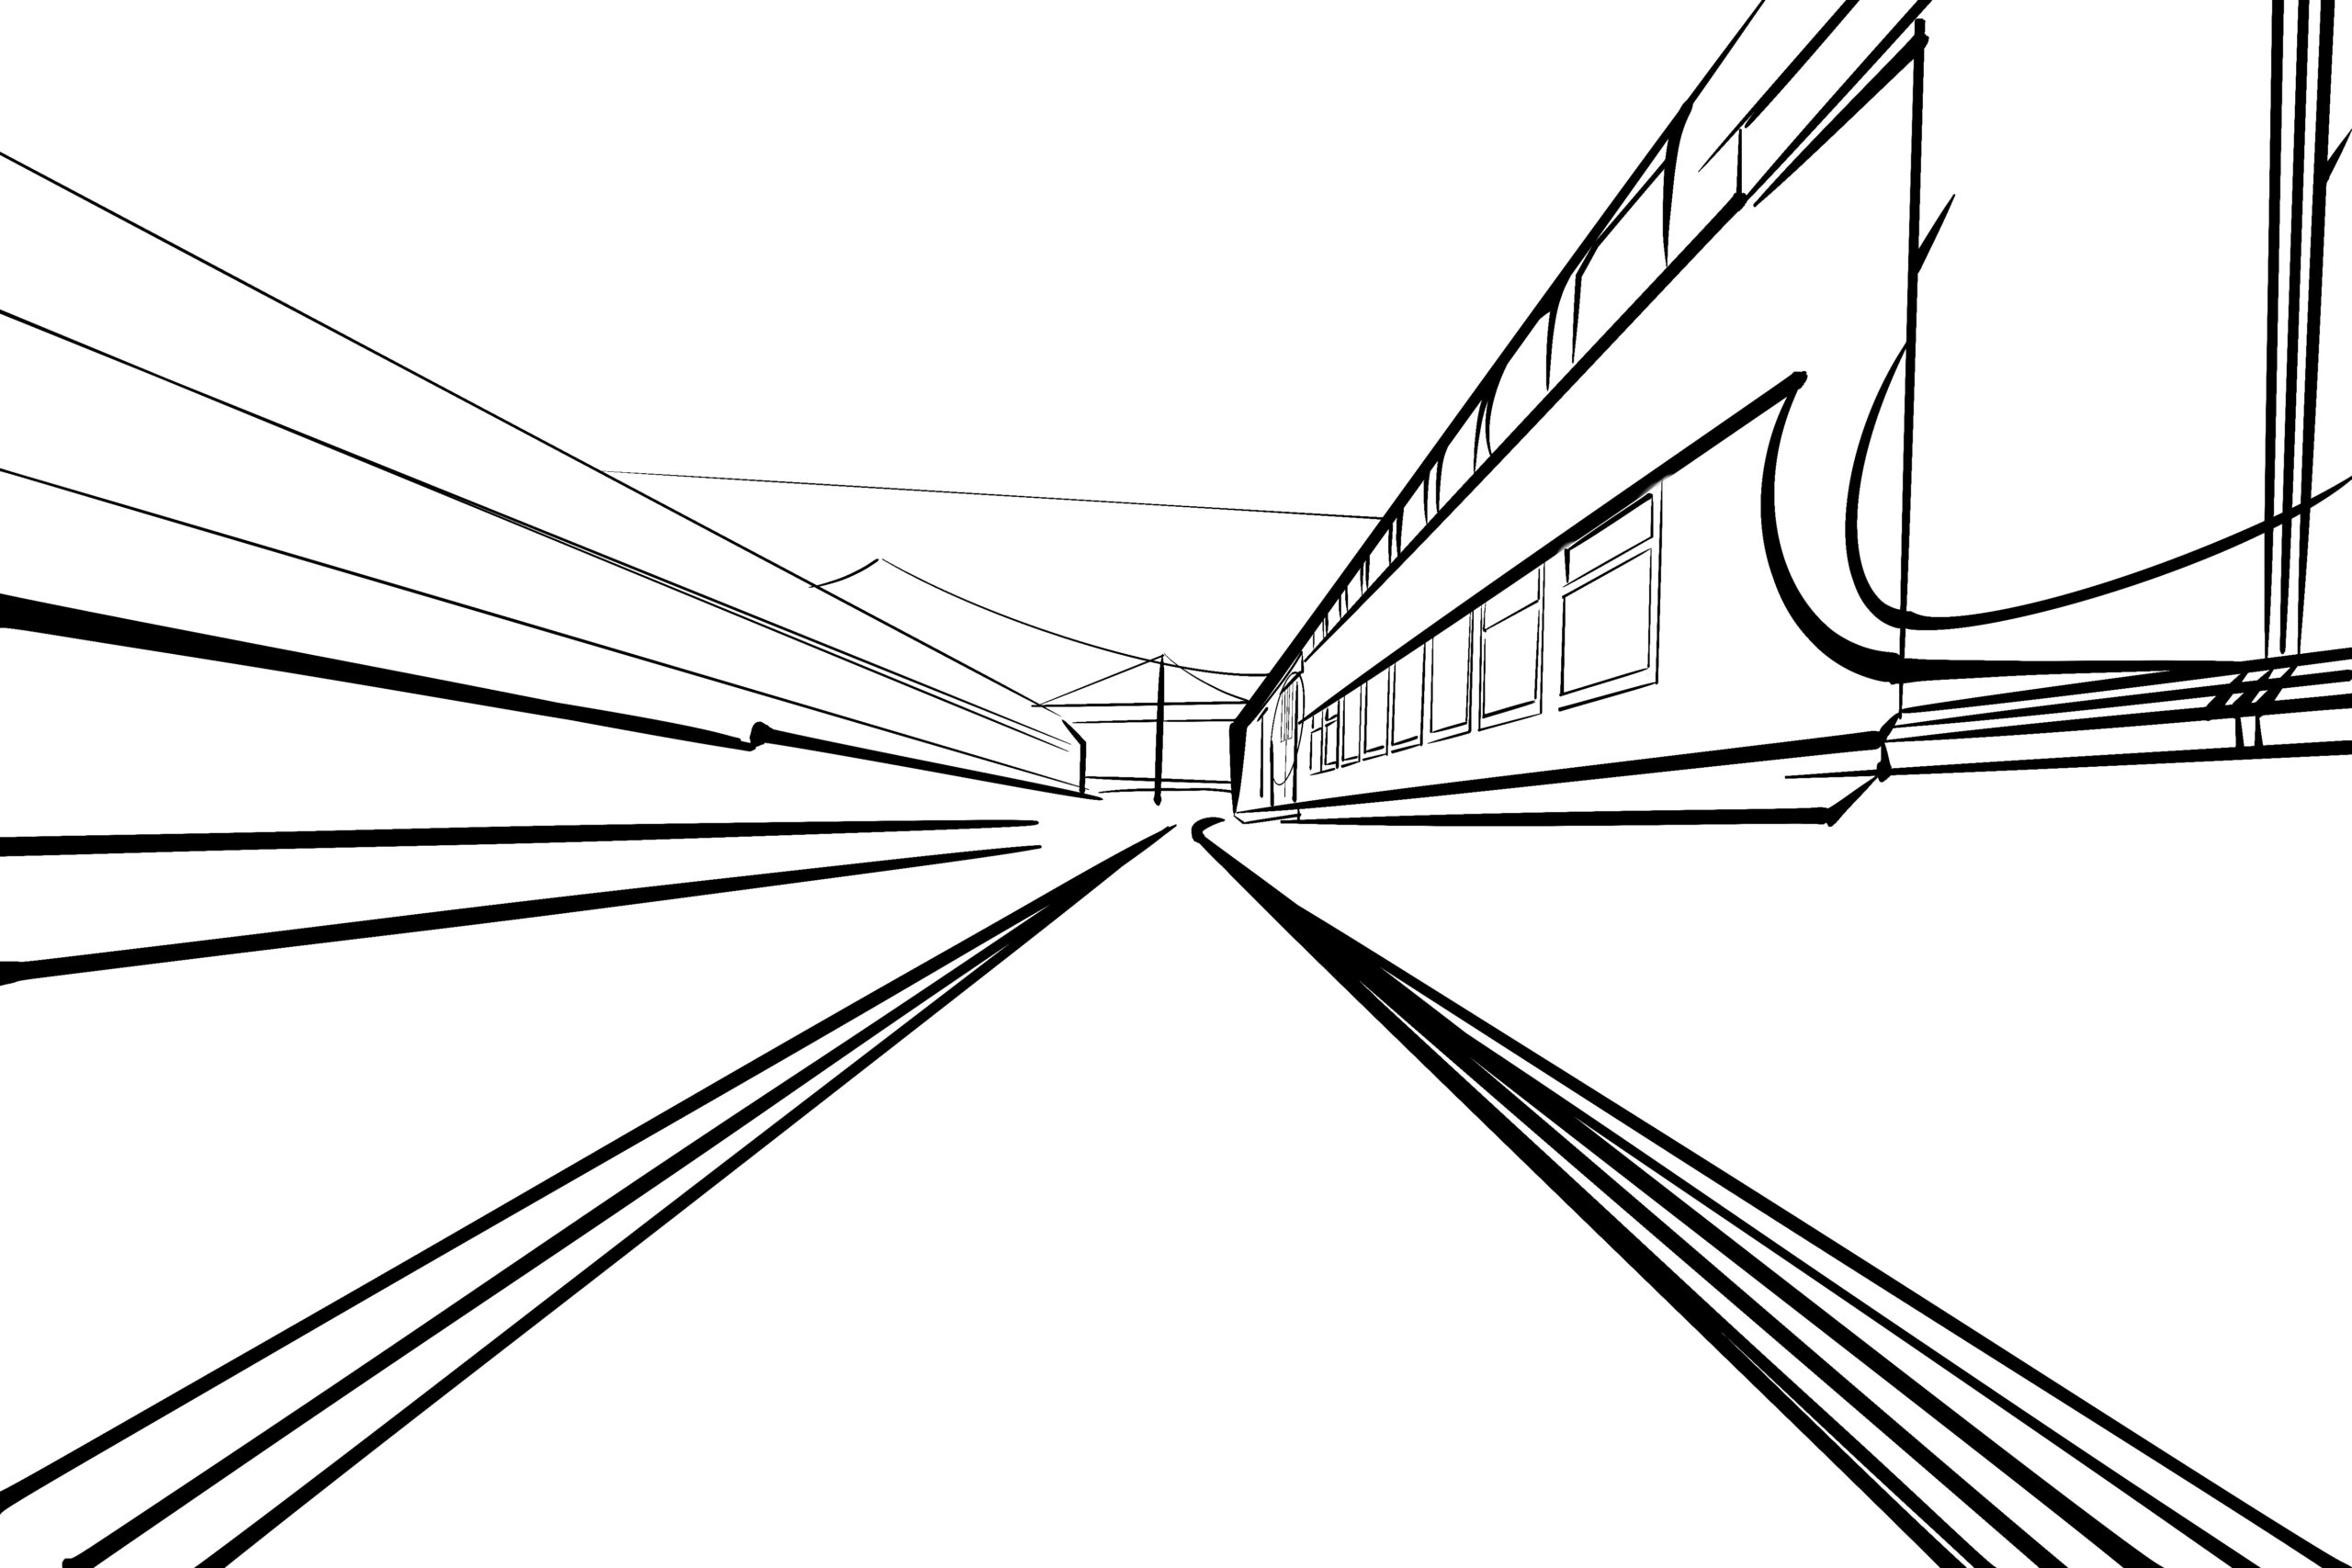 Procreate Vanishing Point Perspective Progress Sketch 2